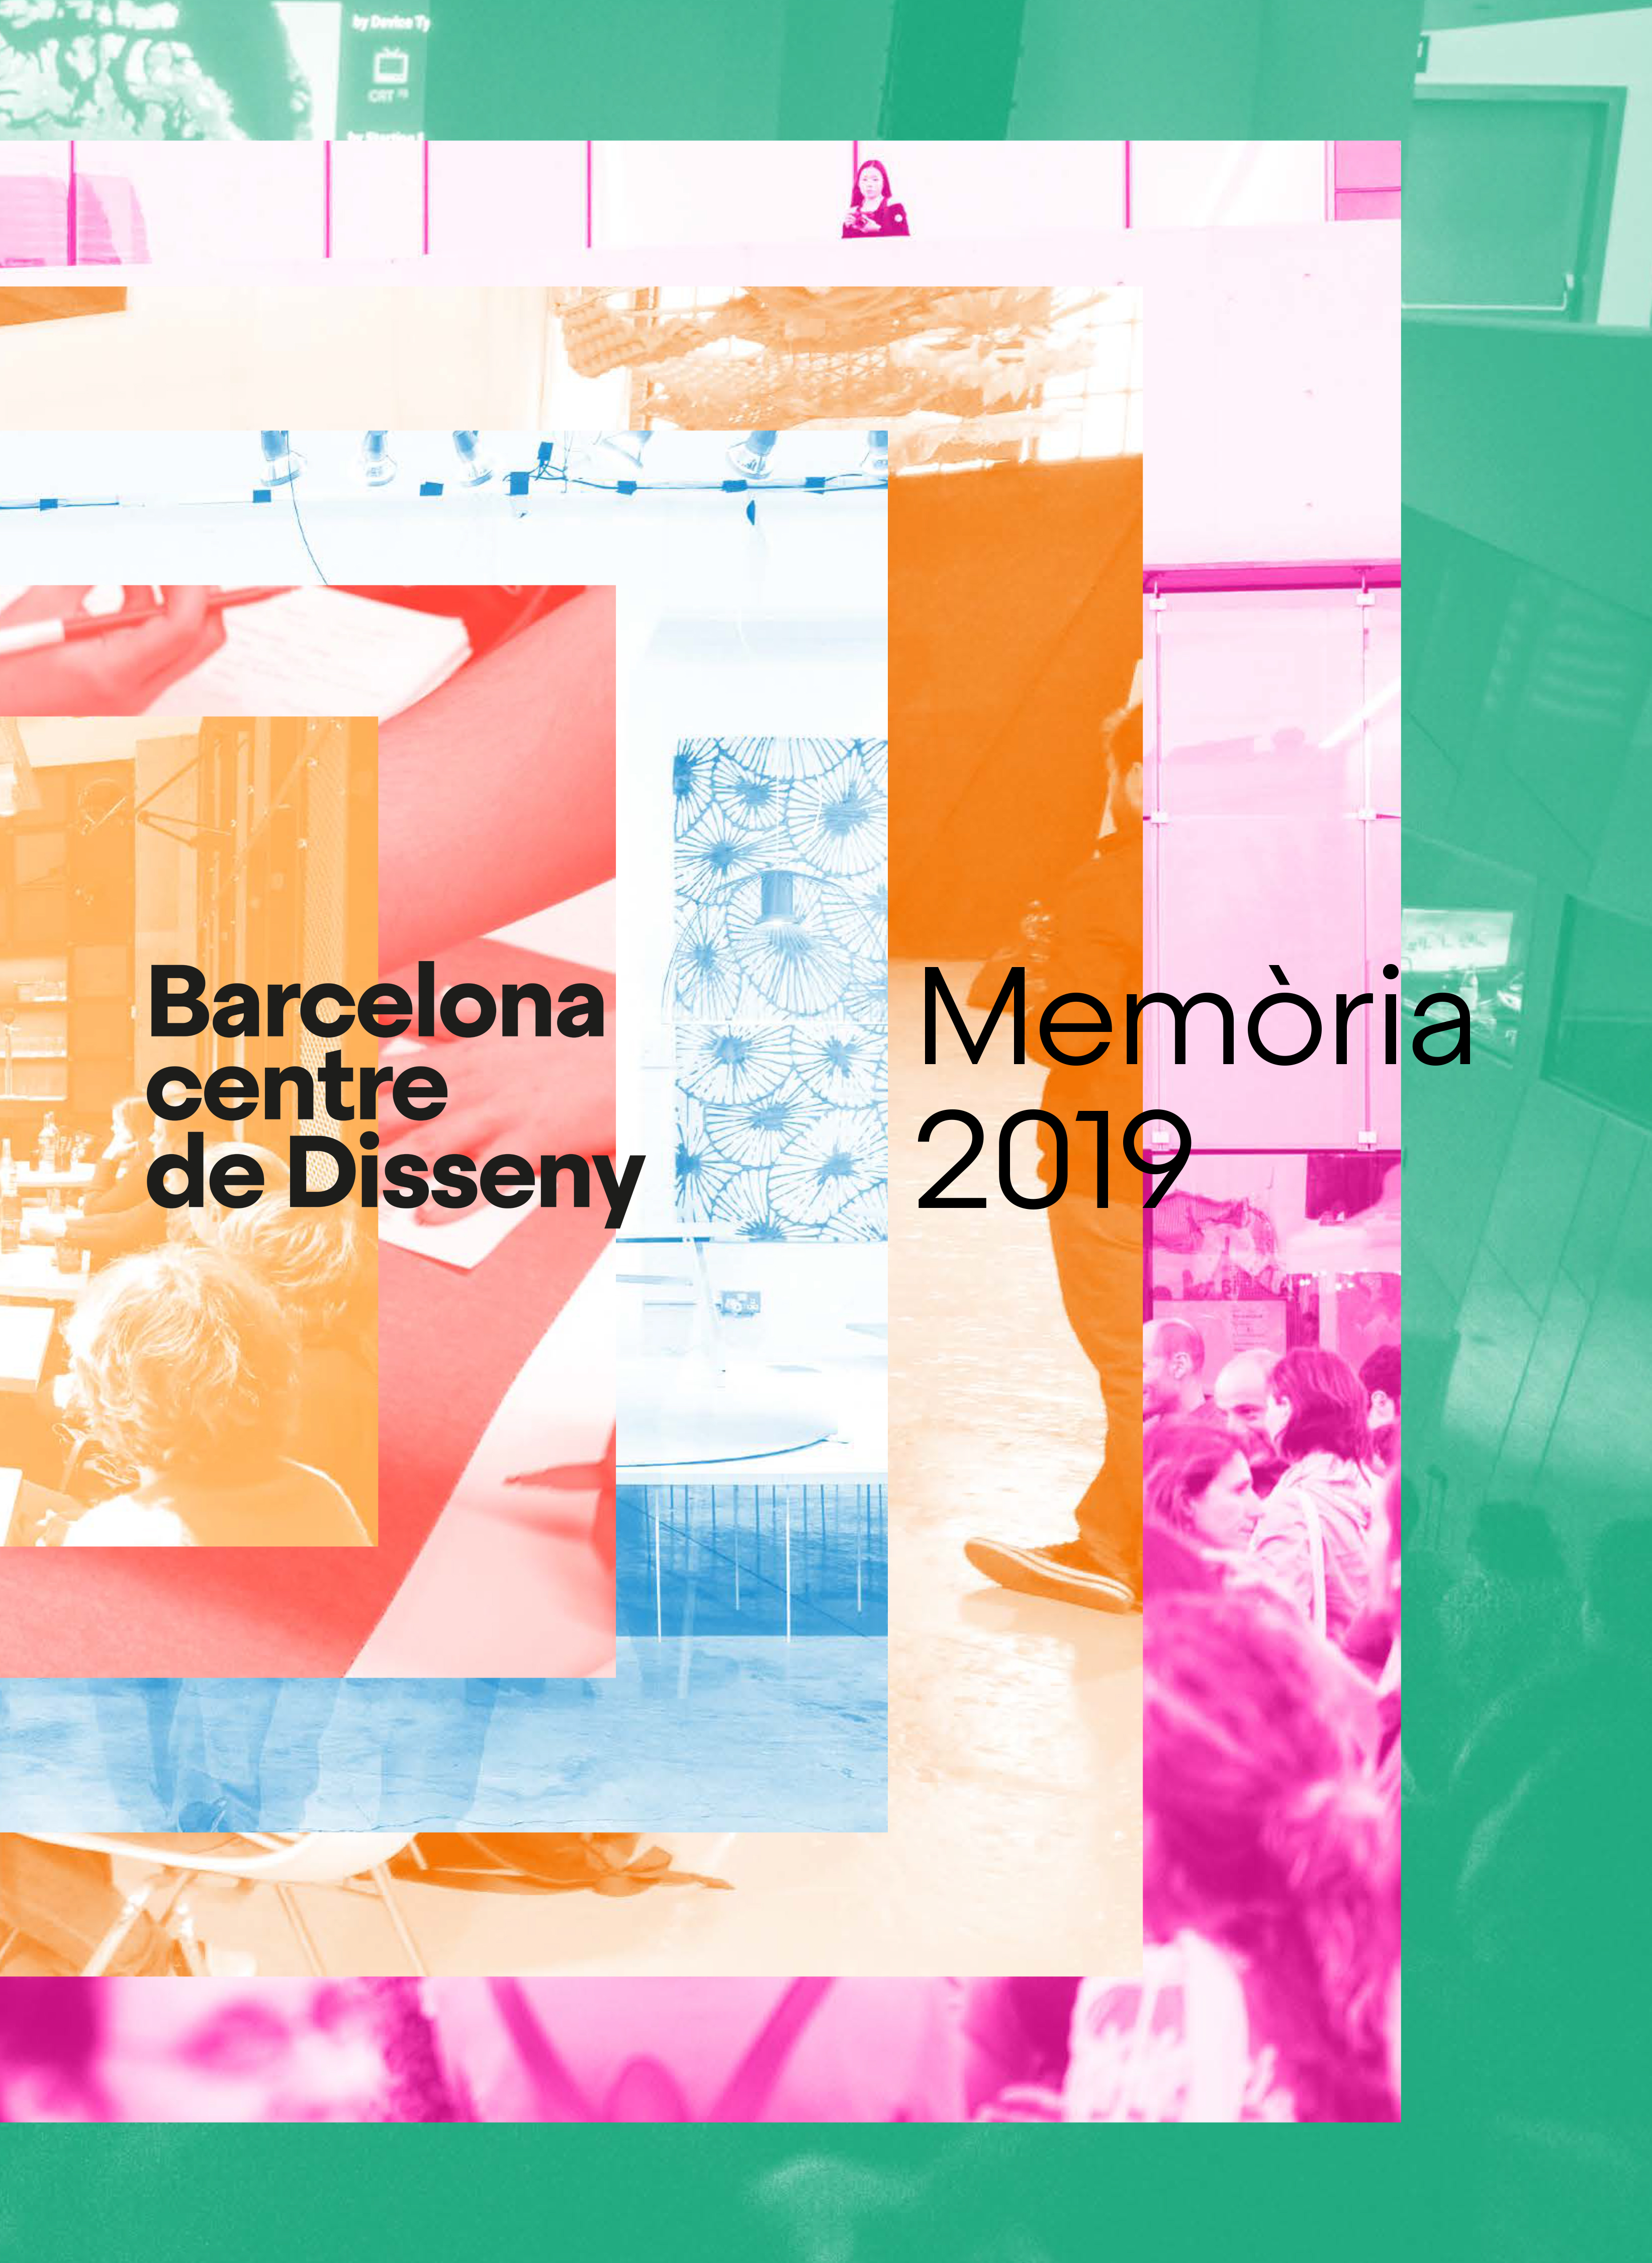 Memòria activitat | Barcelona centro de Diseño